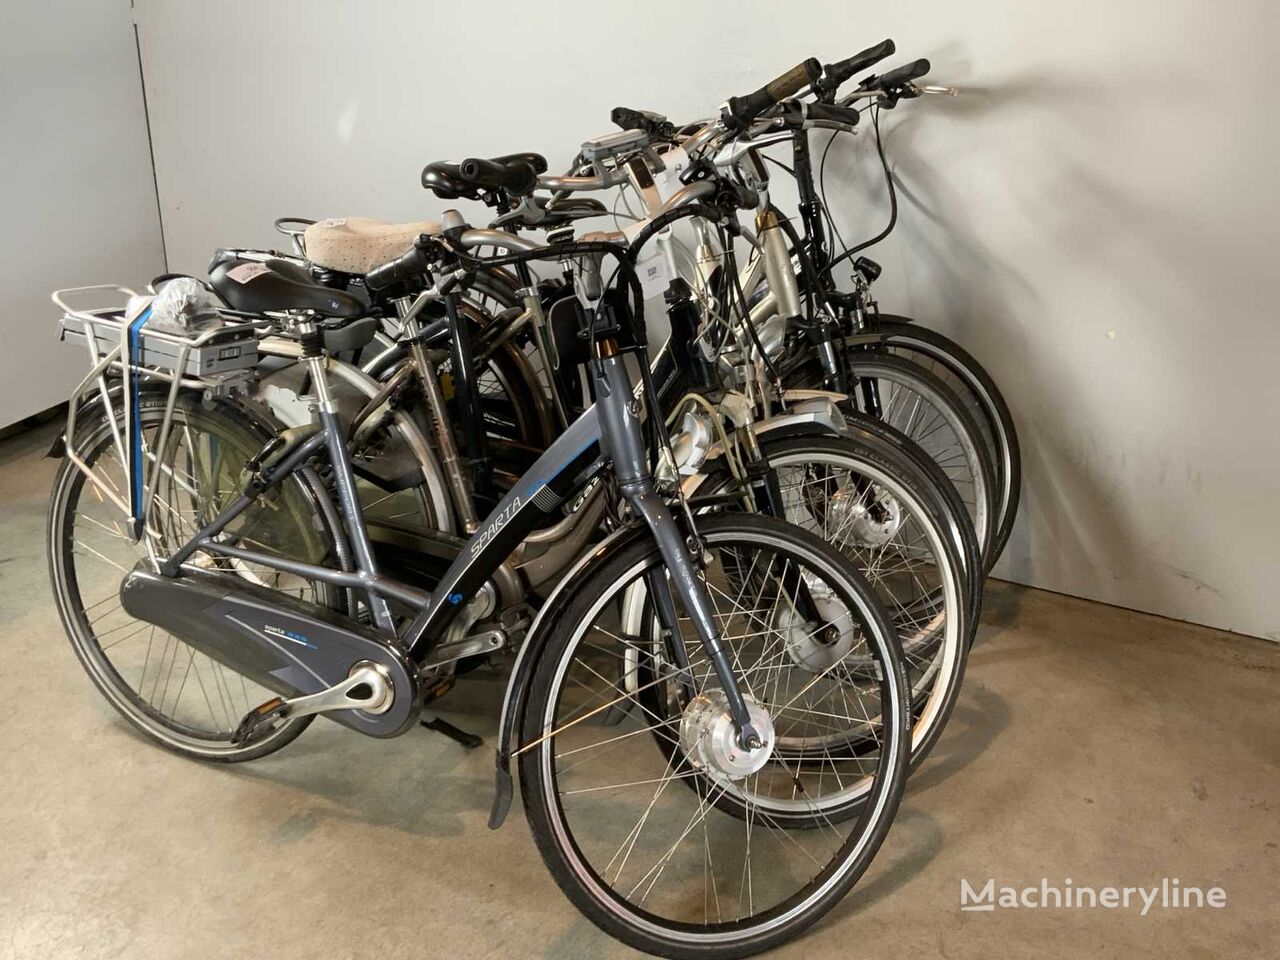 pramogų pramonė Diverse merken en modellen 5x elektrische fiets